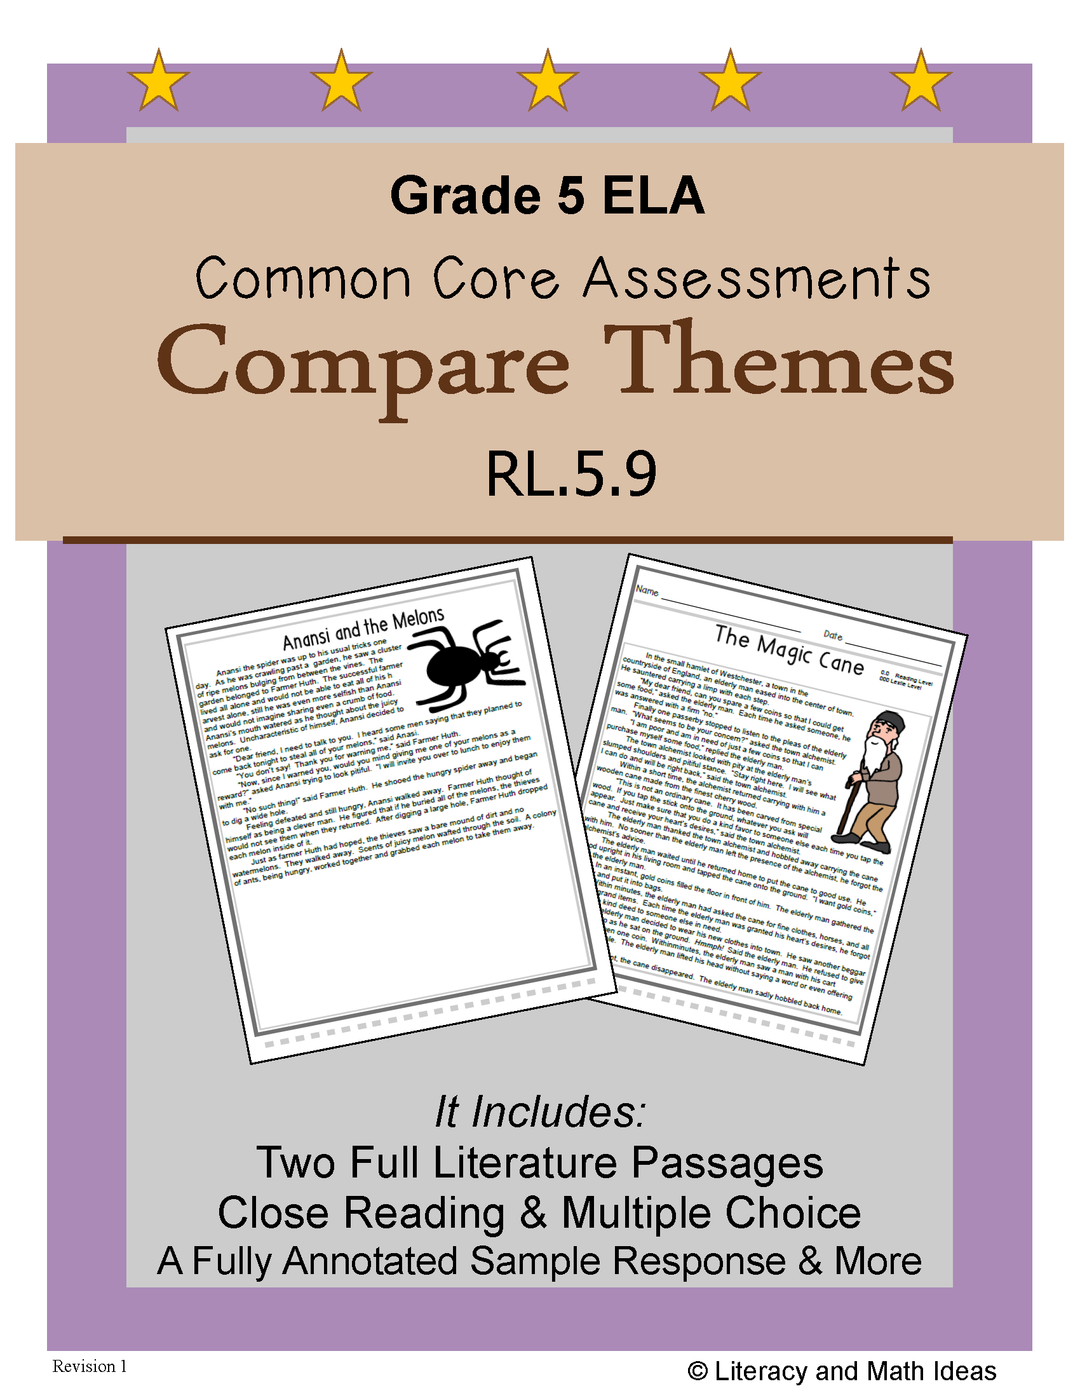 Grade 5 Common Core Assessments: Compare Themes RL.5.9